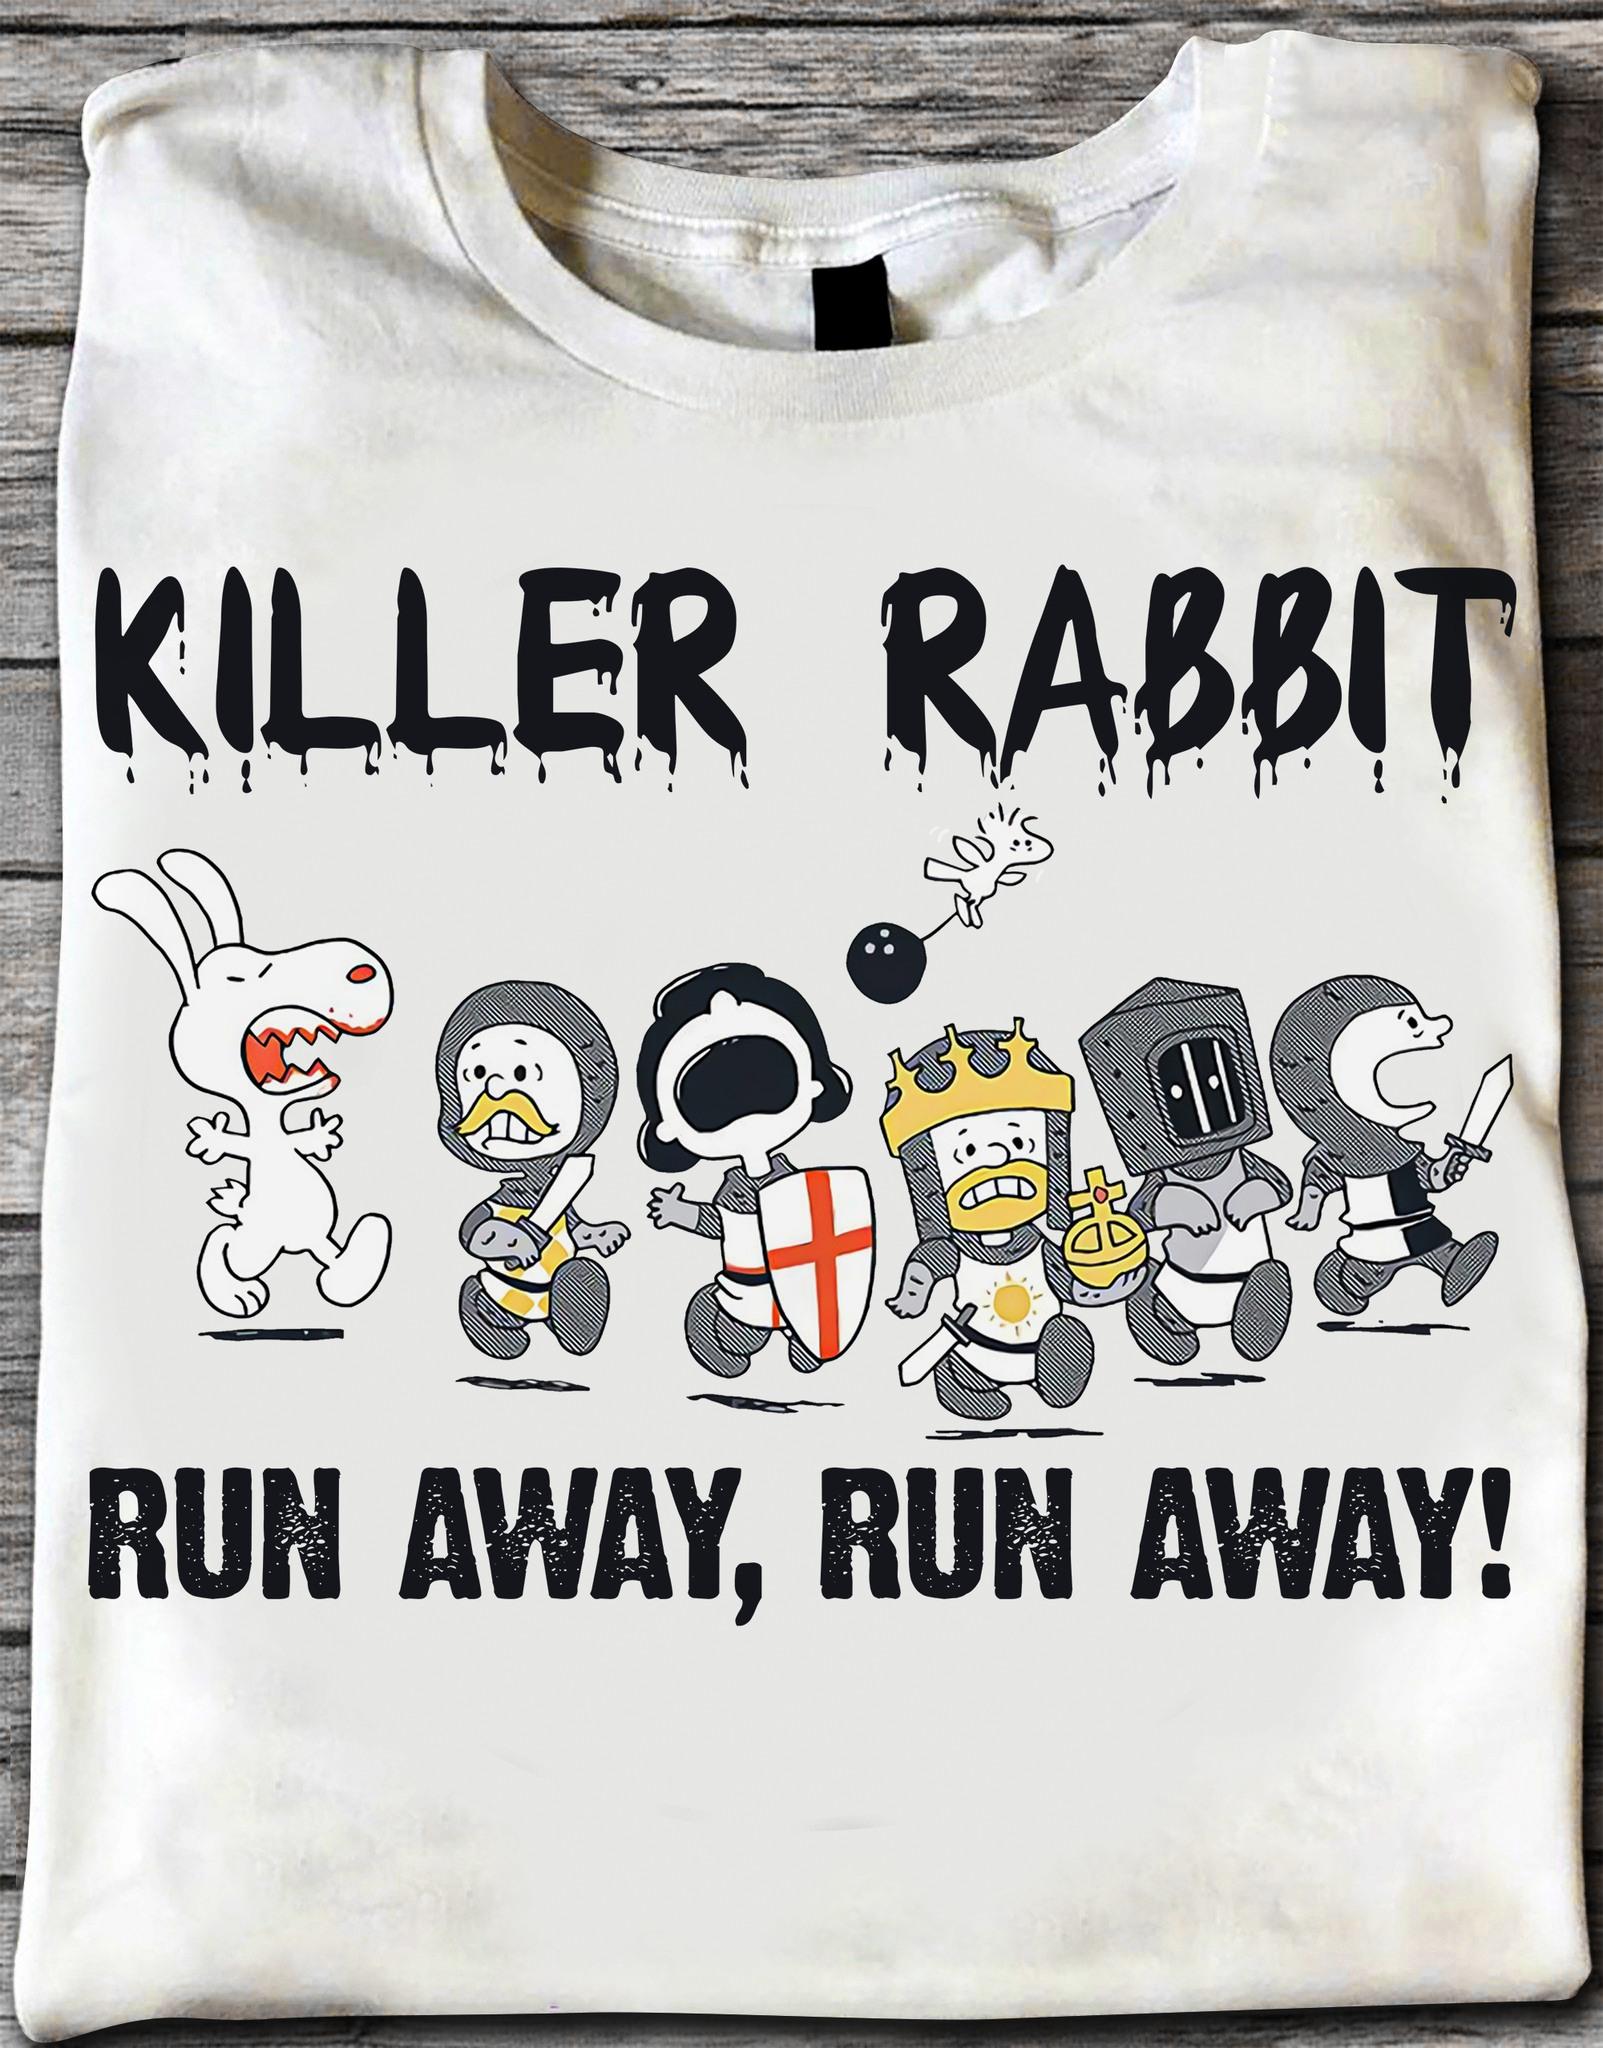 The Peanuts Monty Python - Killer Rabbit Run Away